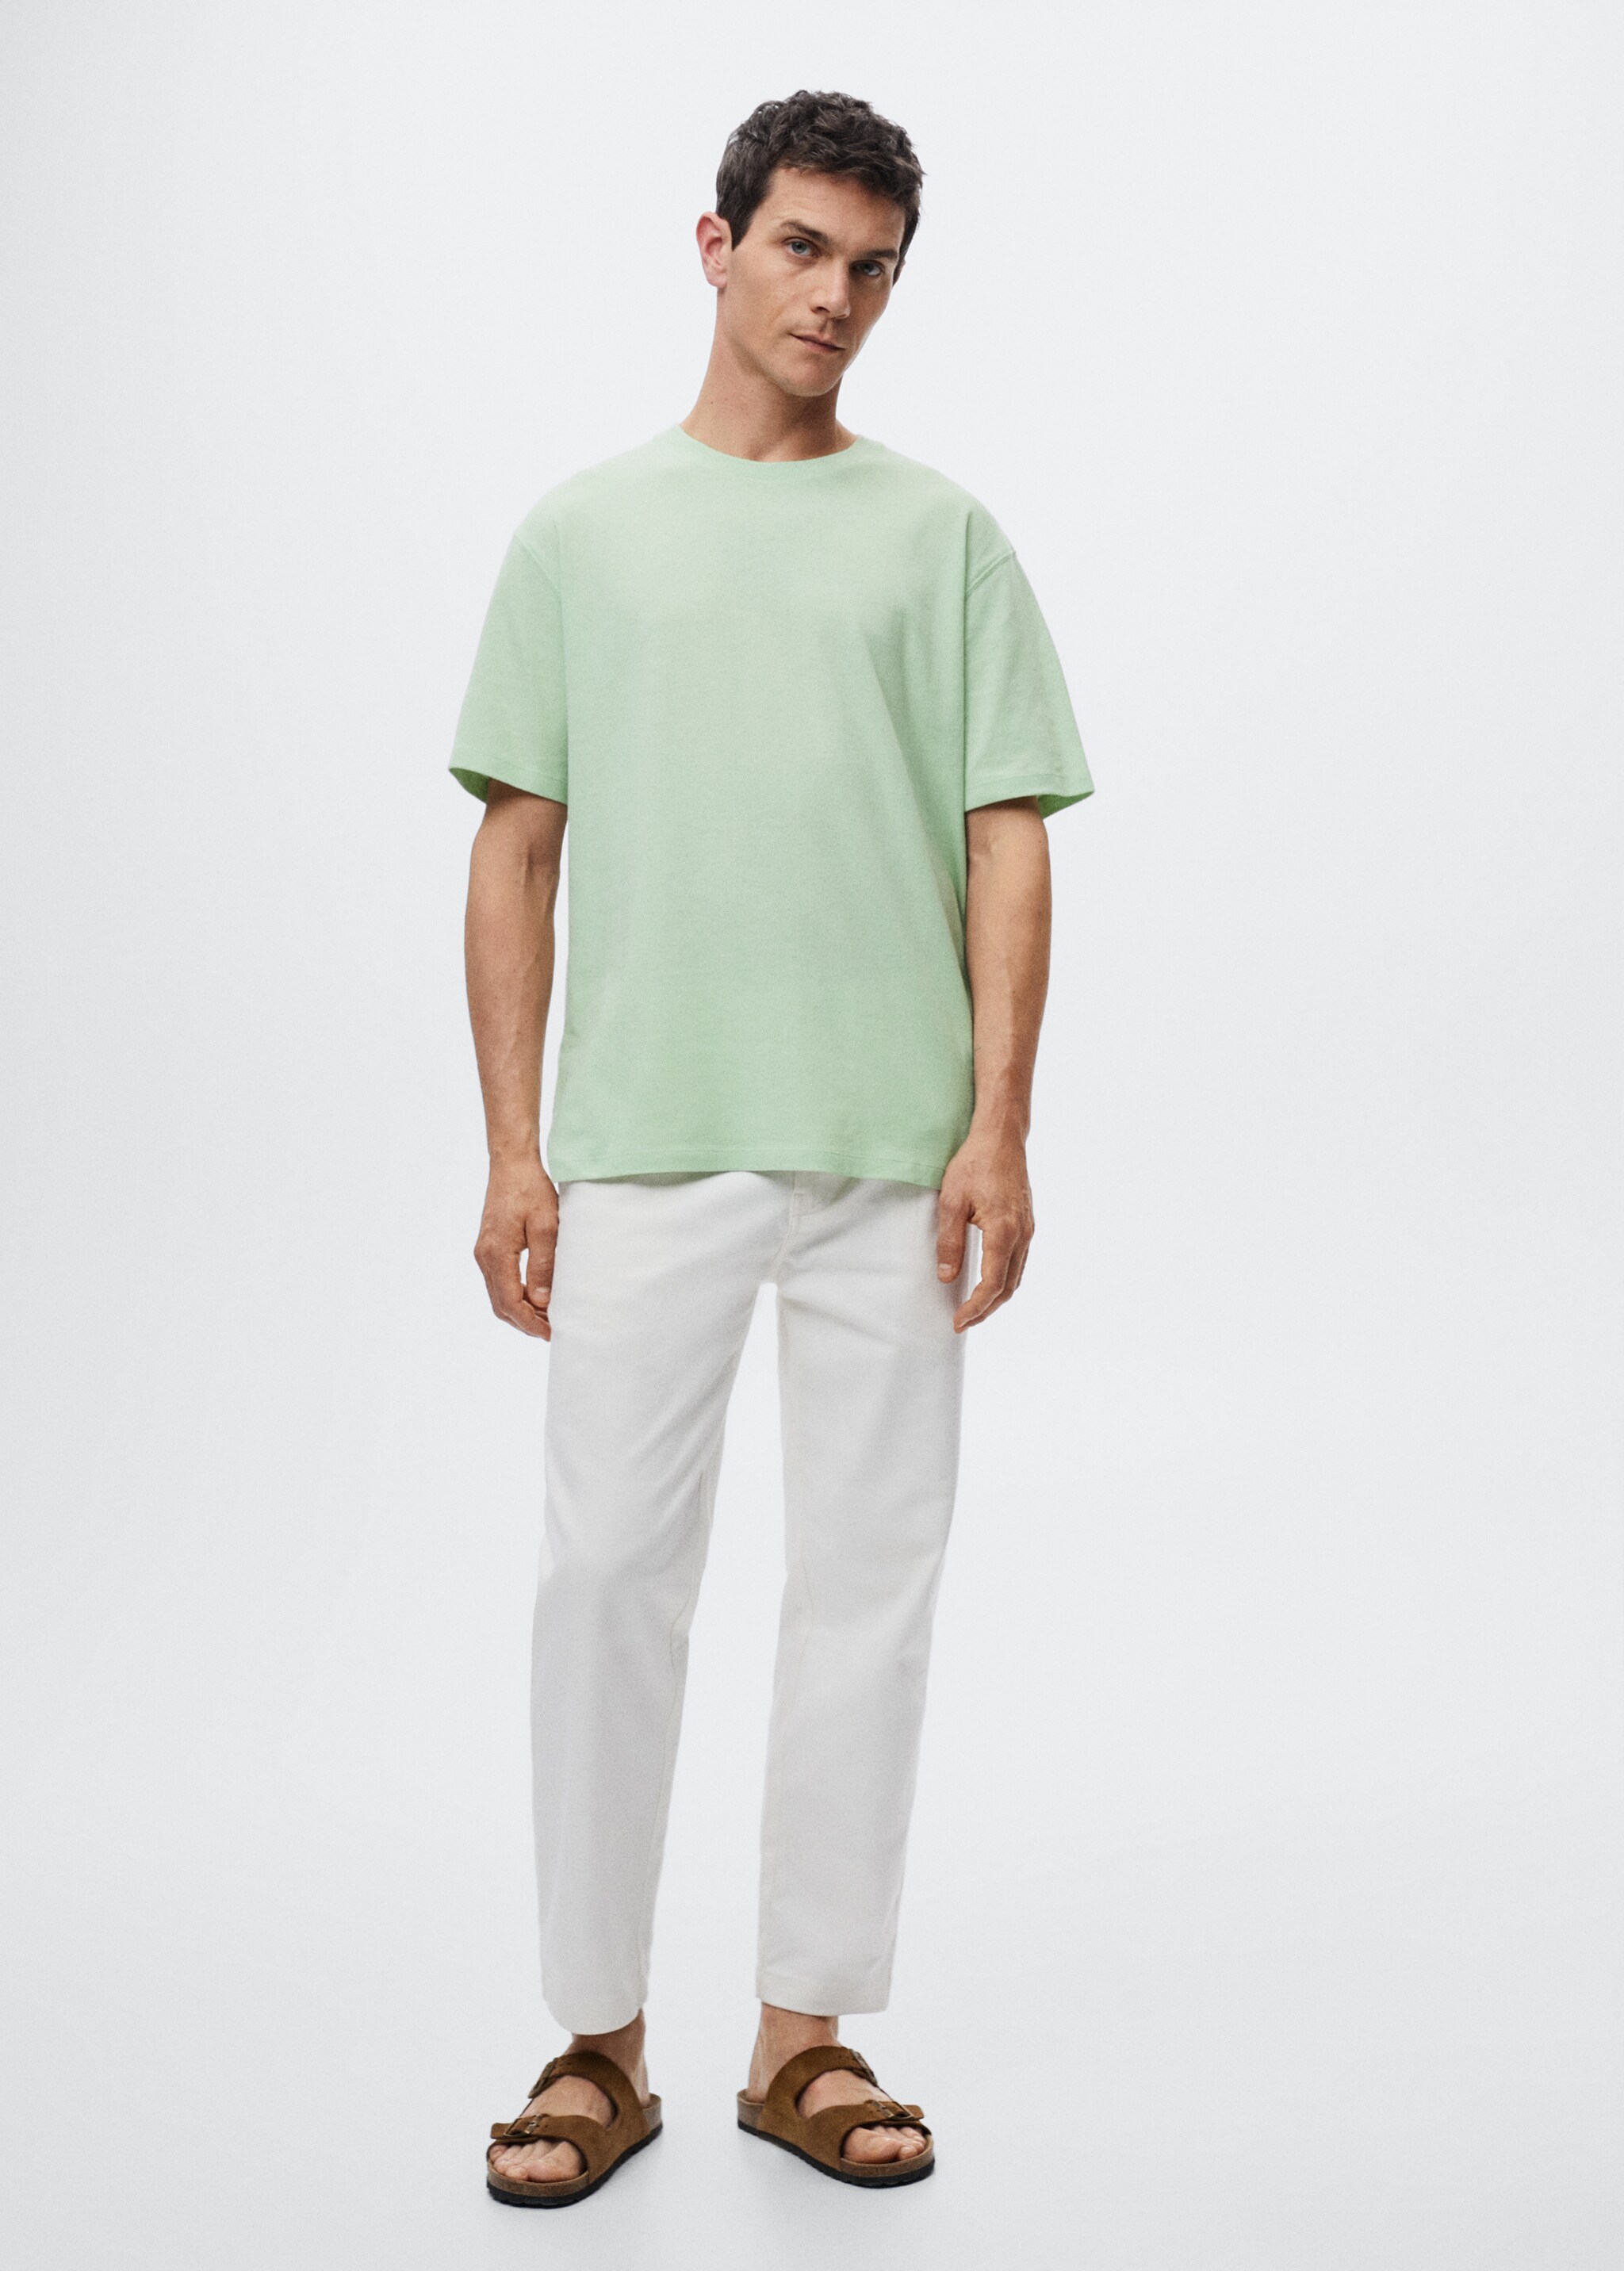 Camiseta algodón lino - Plano general